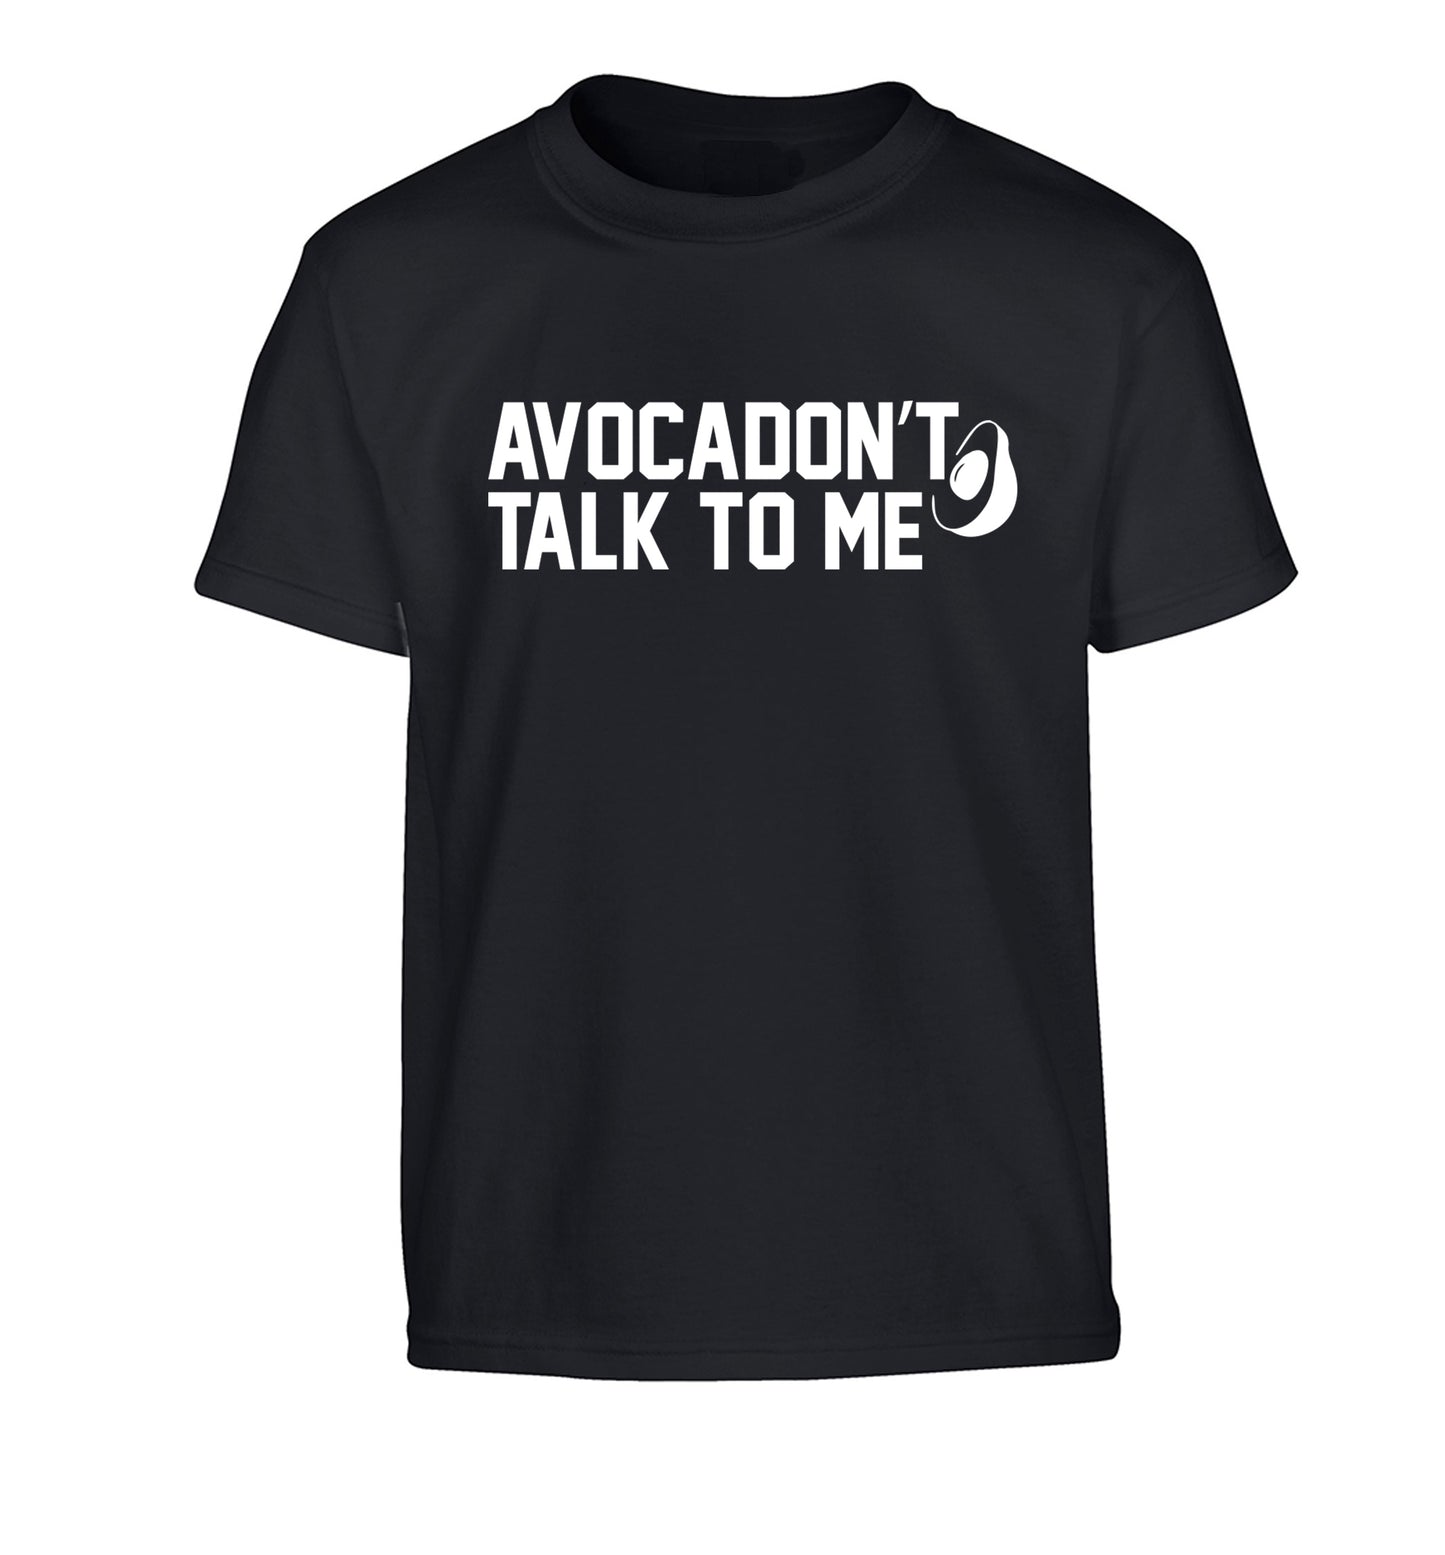 Avocadon't talk to me Children's black Tshirt 12-14 Years